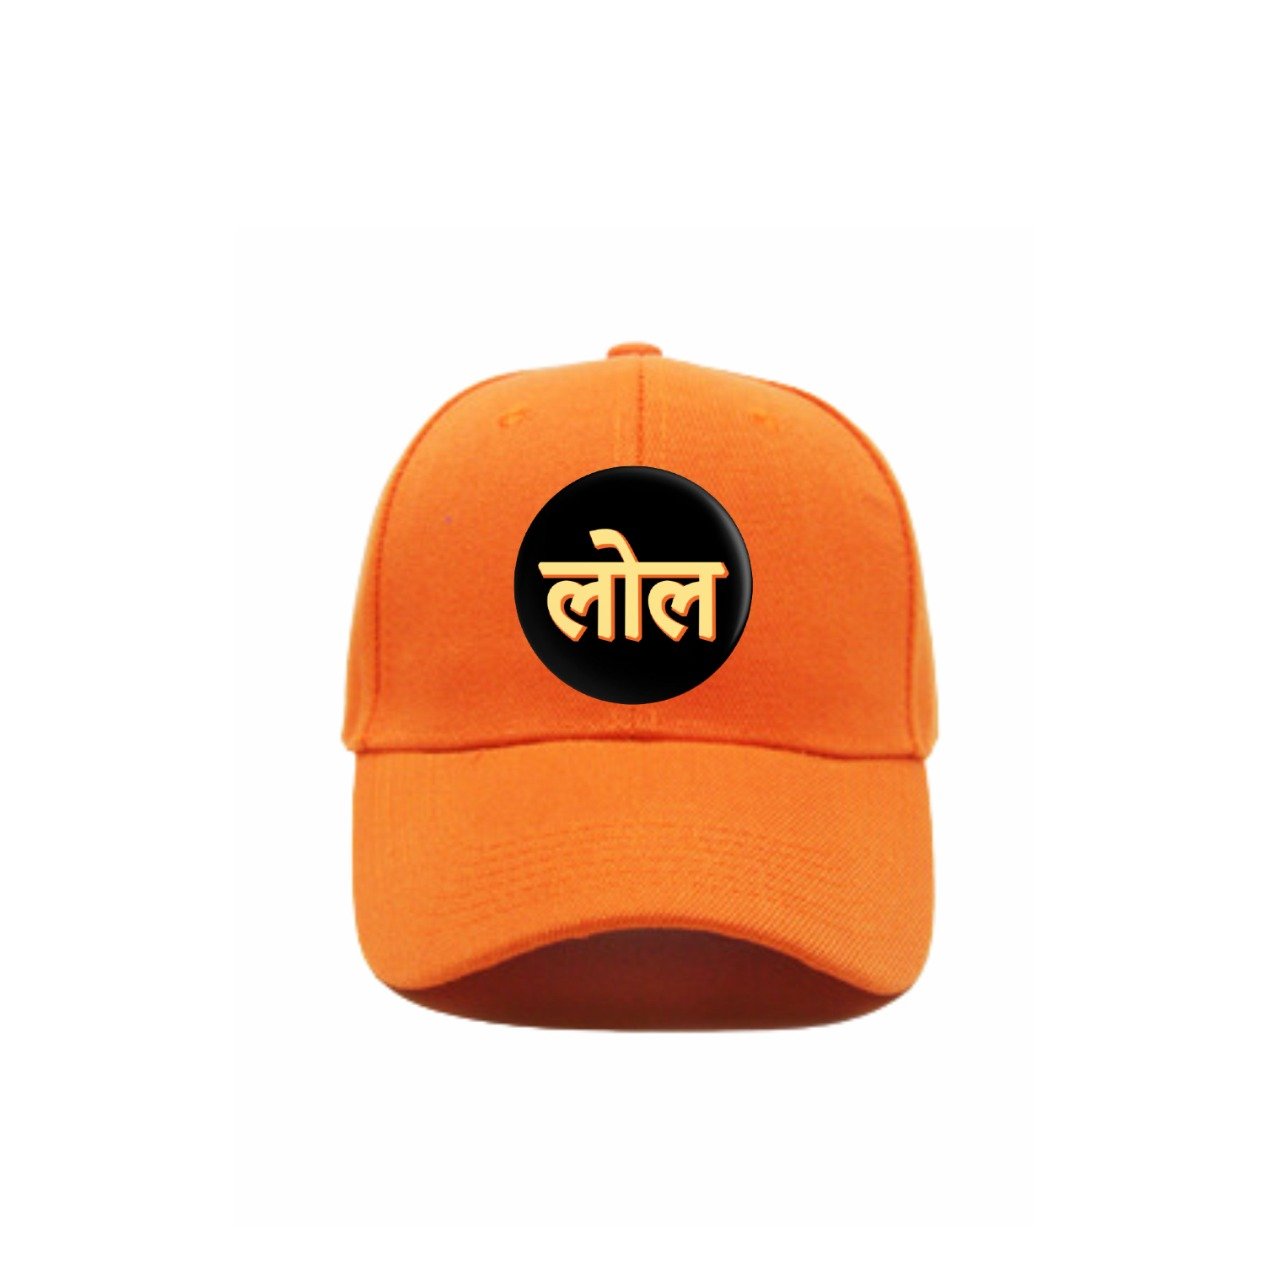 Lol Printed Hindi Cap (Free Size)